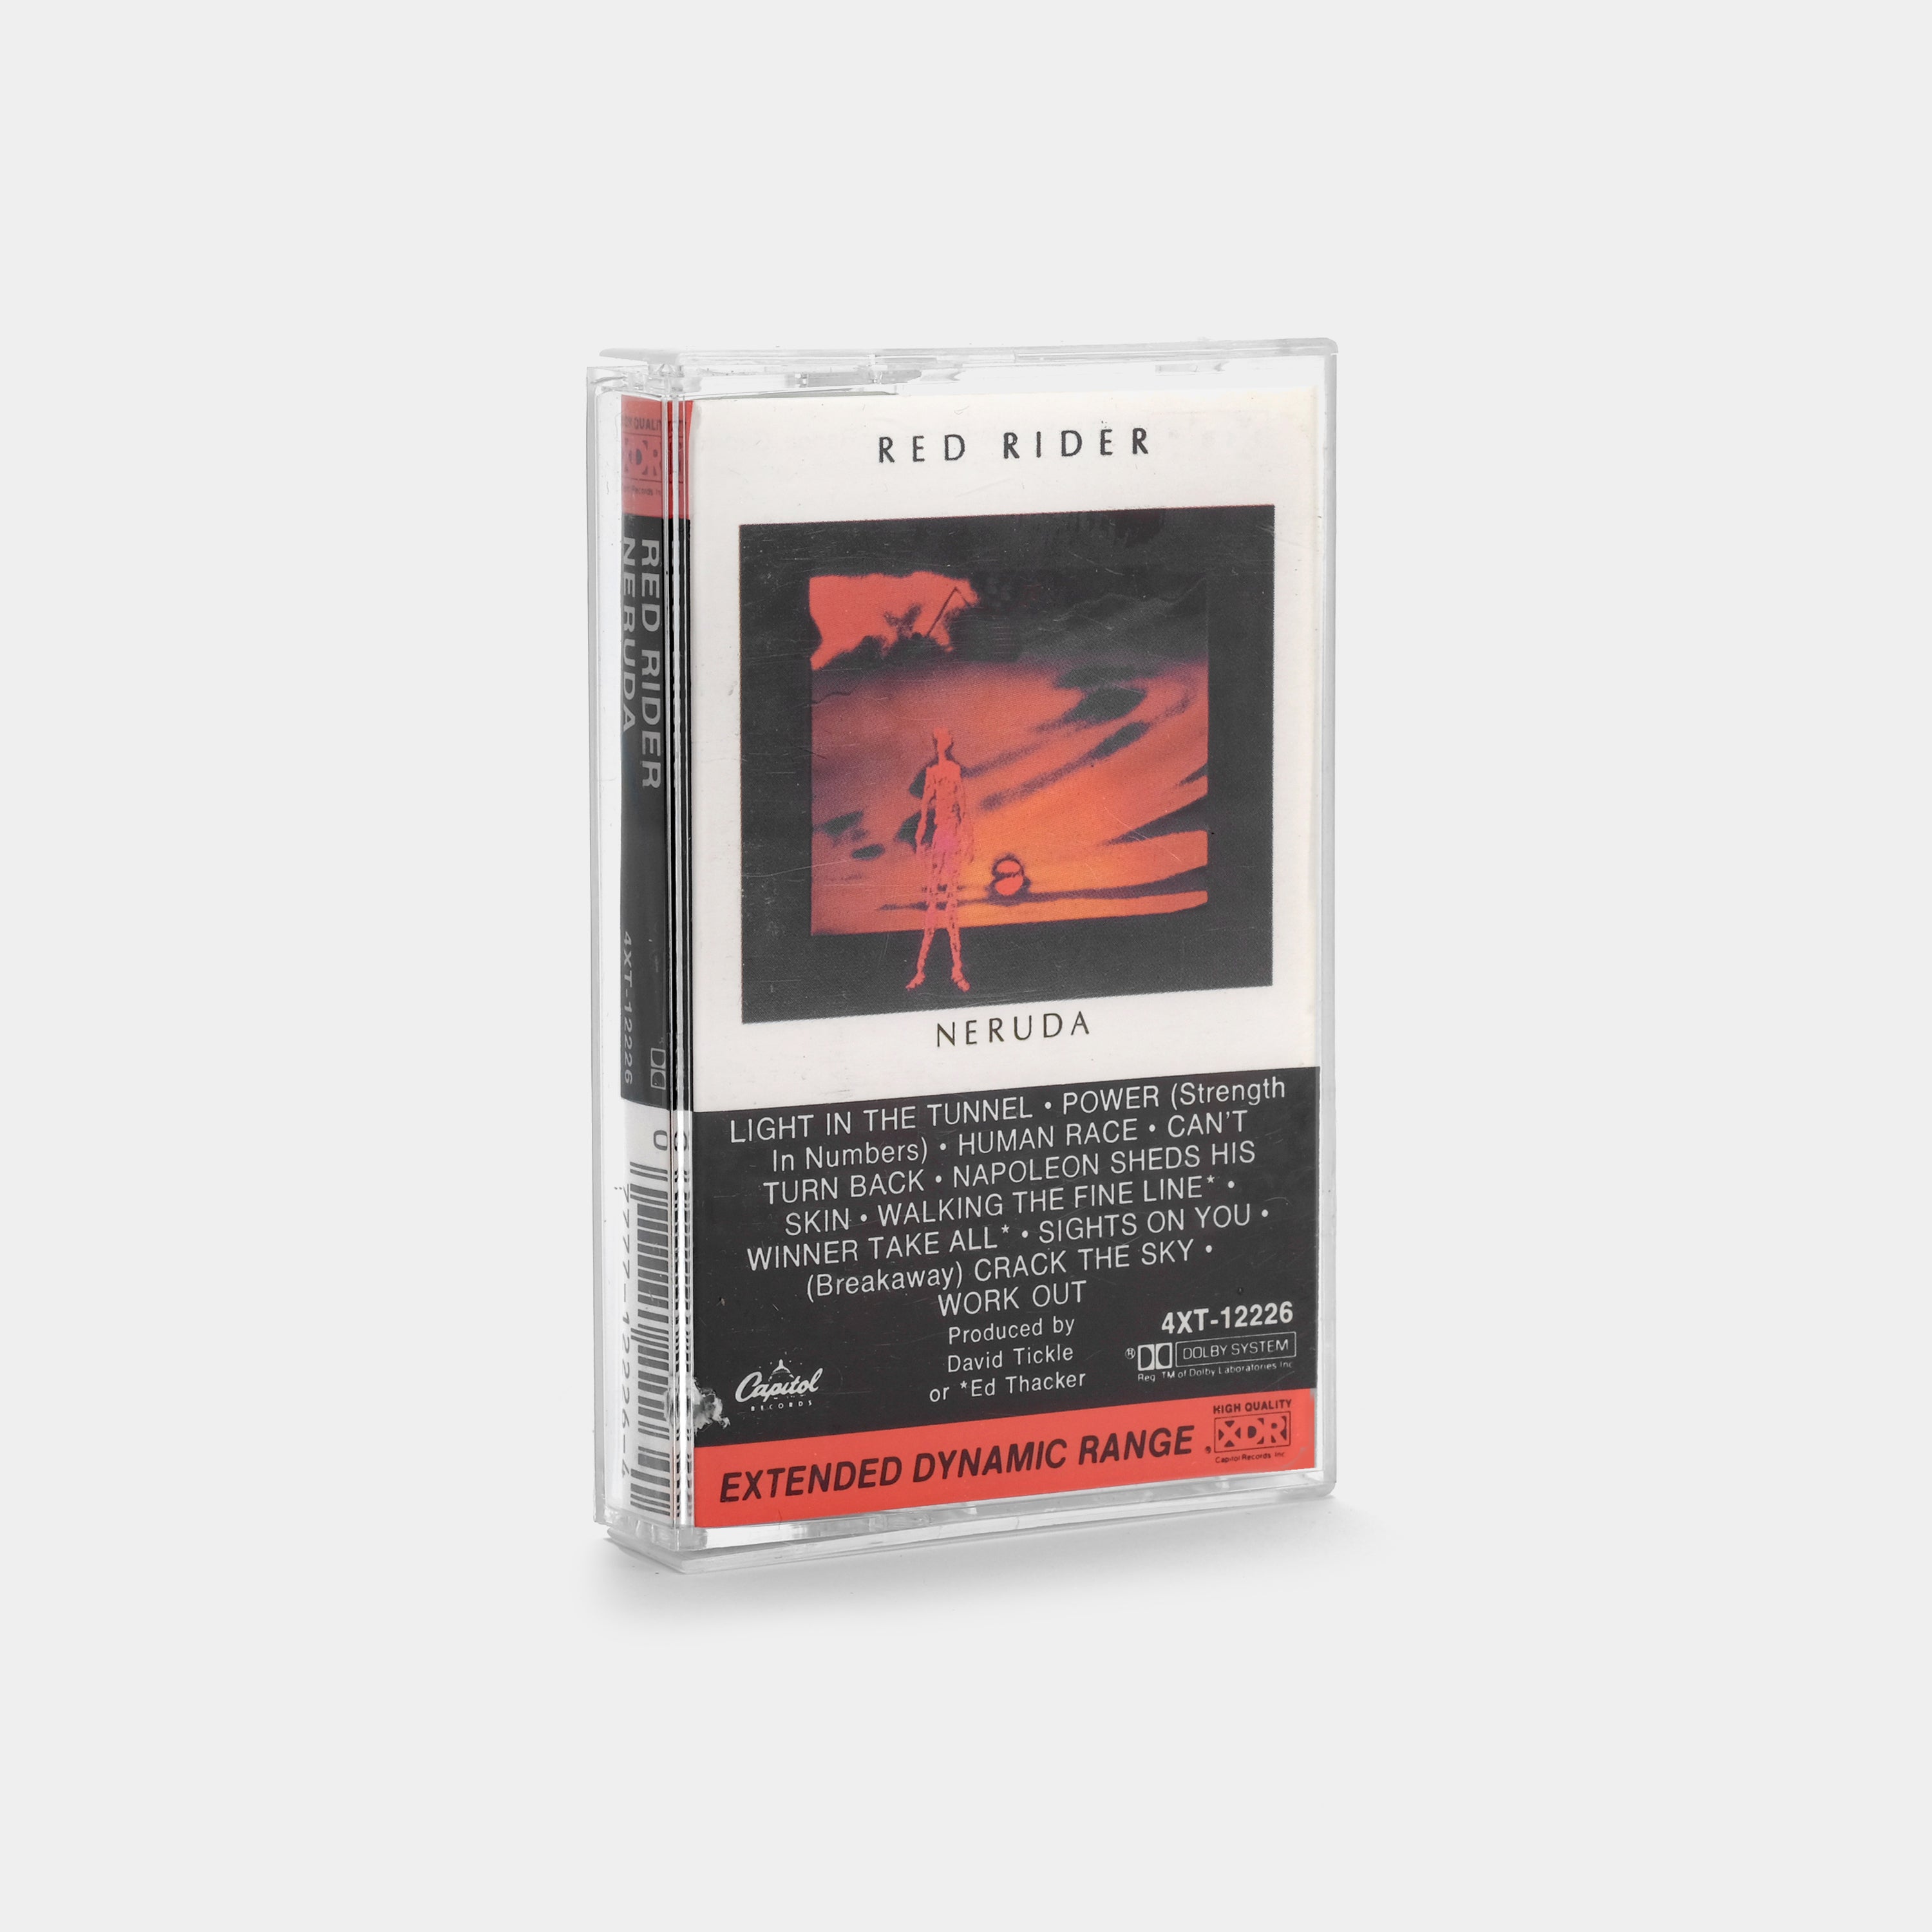 Red Rider - Neruda Cassette Tape